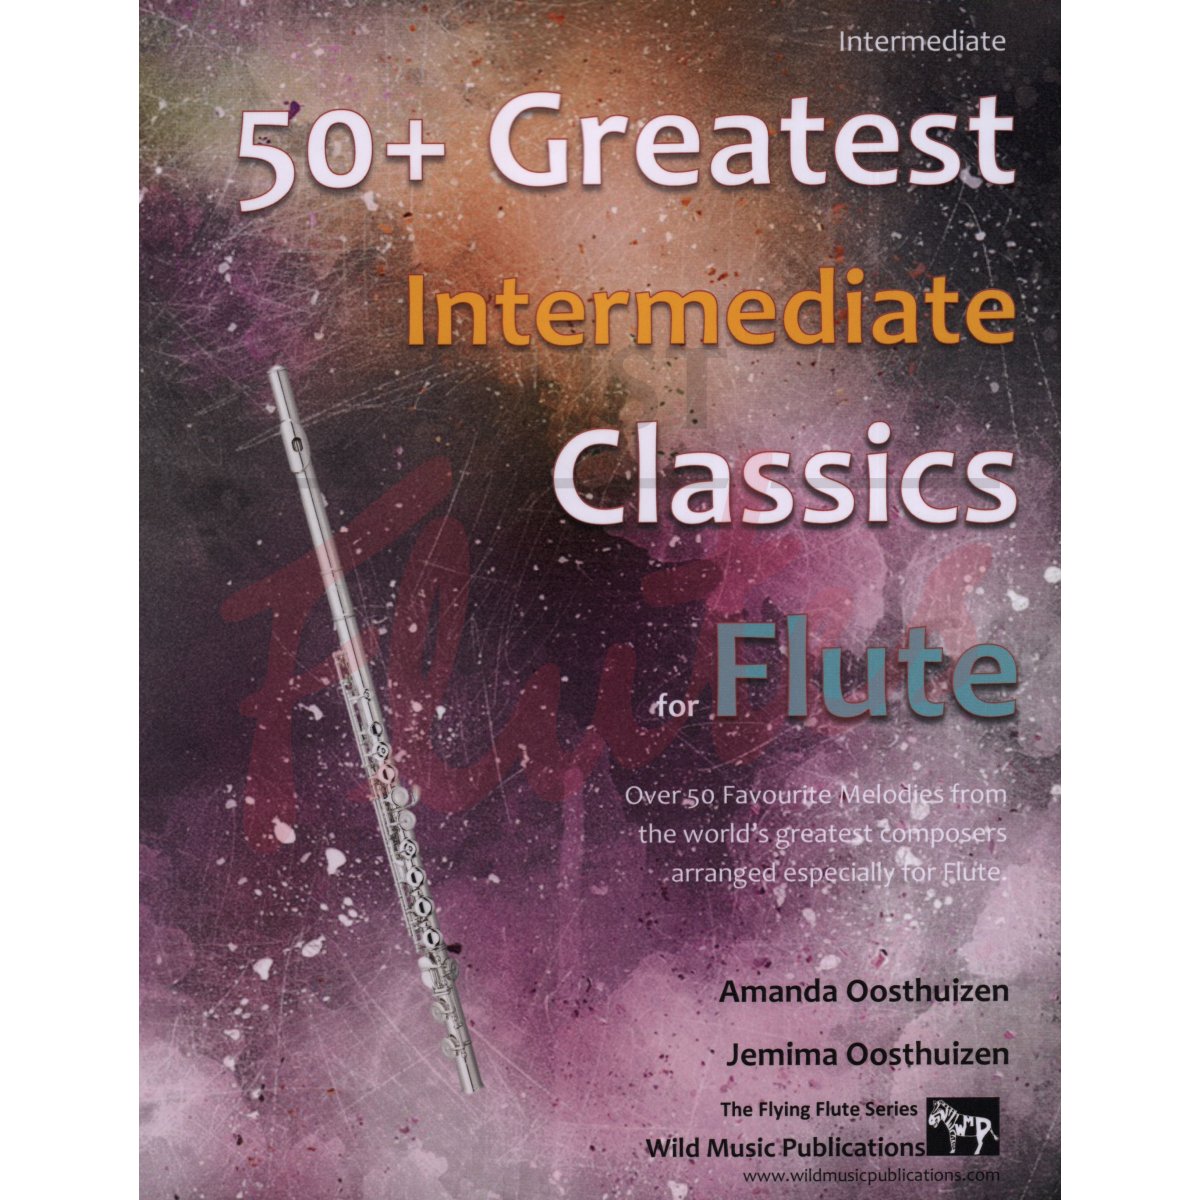 50+ Greatest Intermediate Classics for Flute